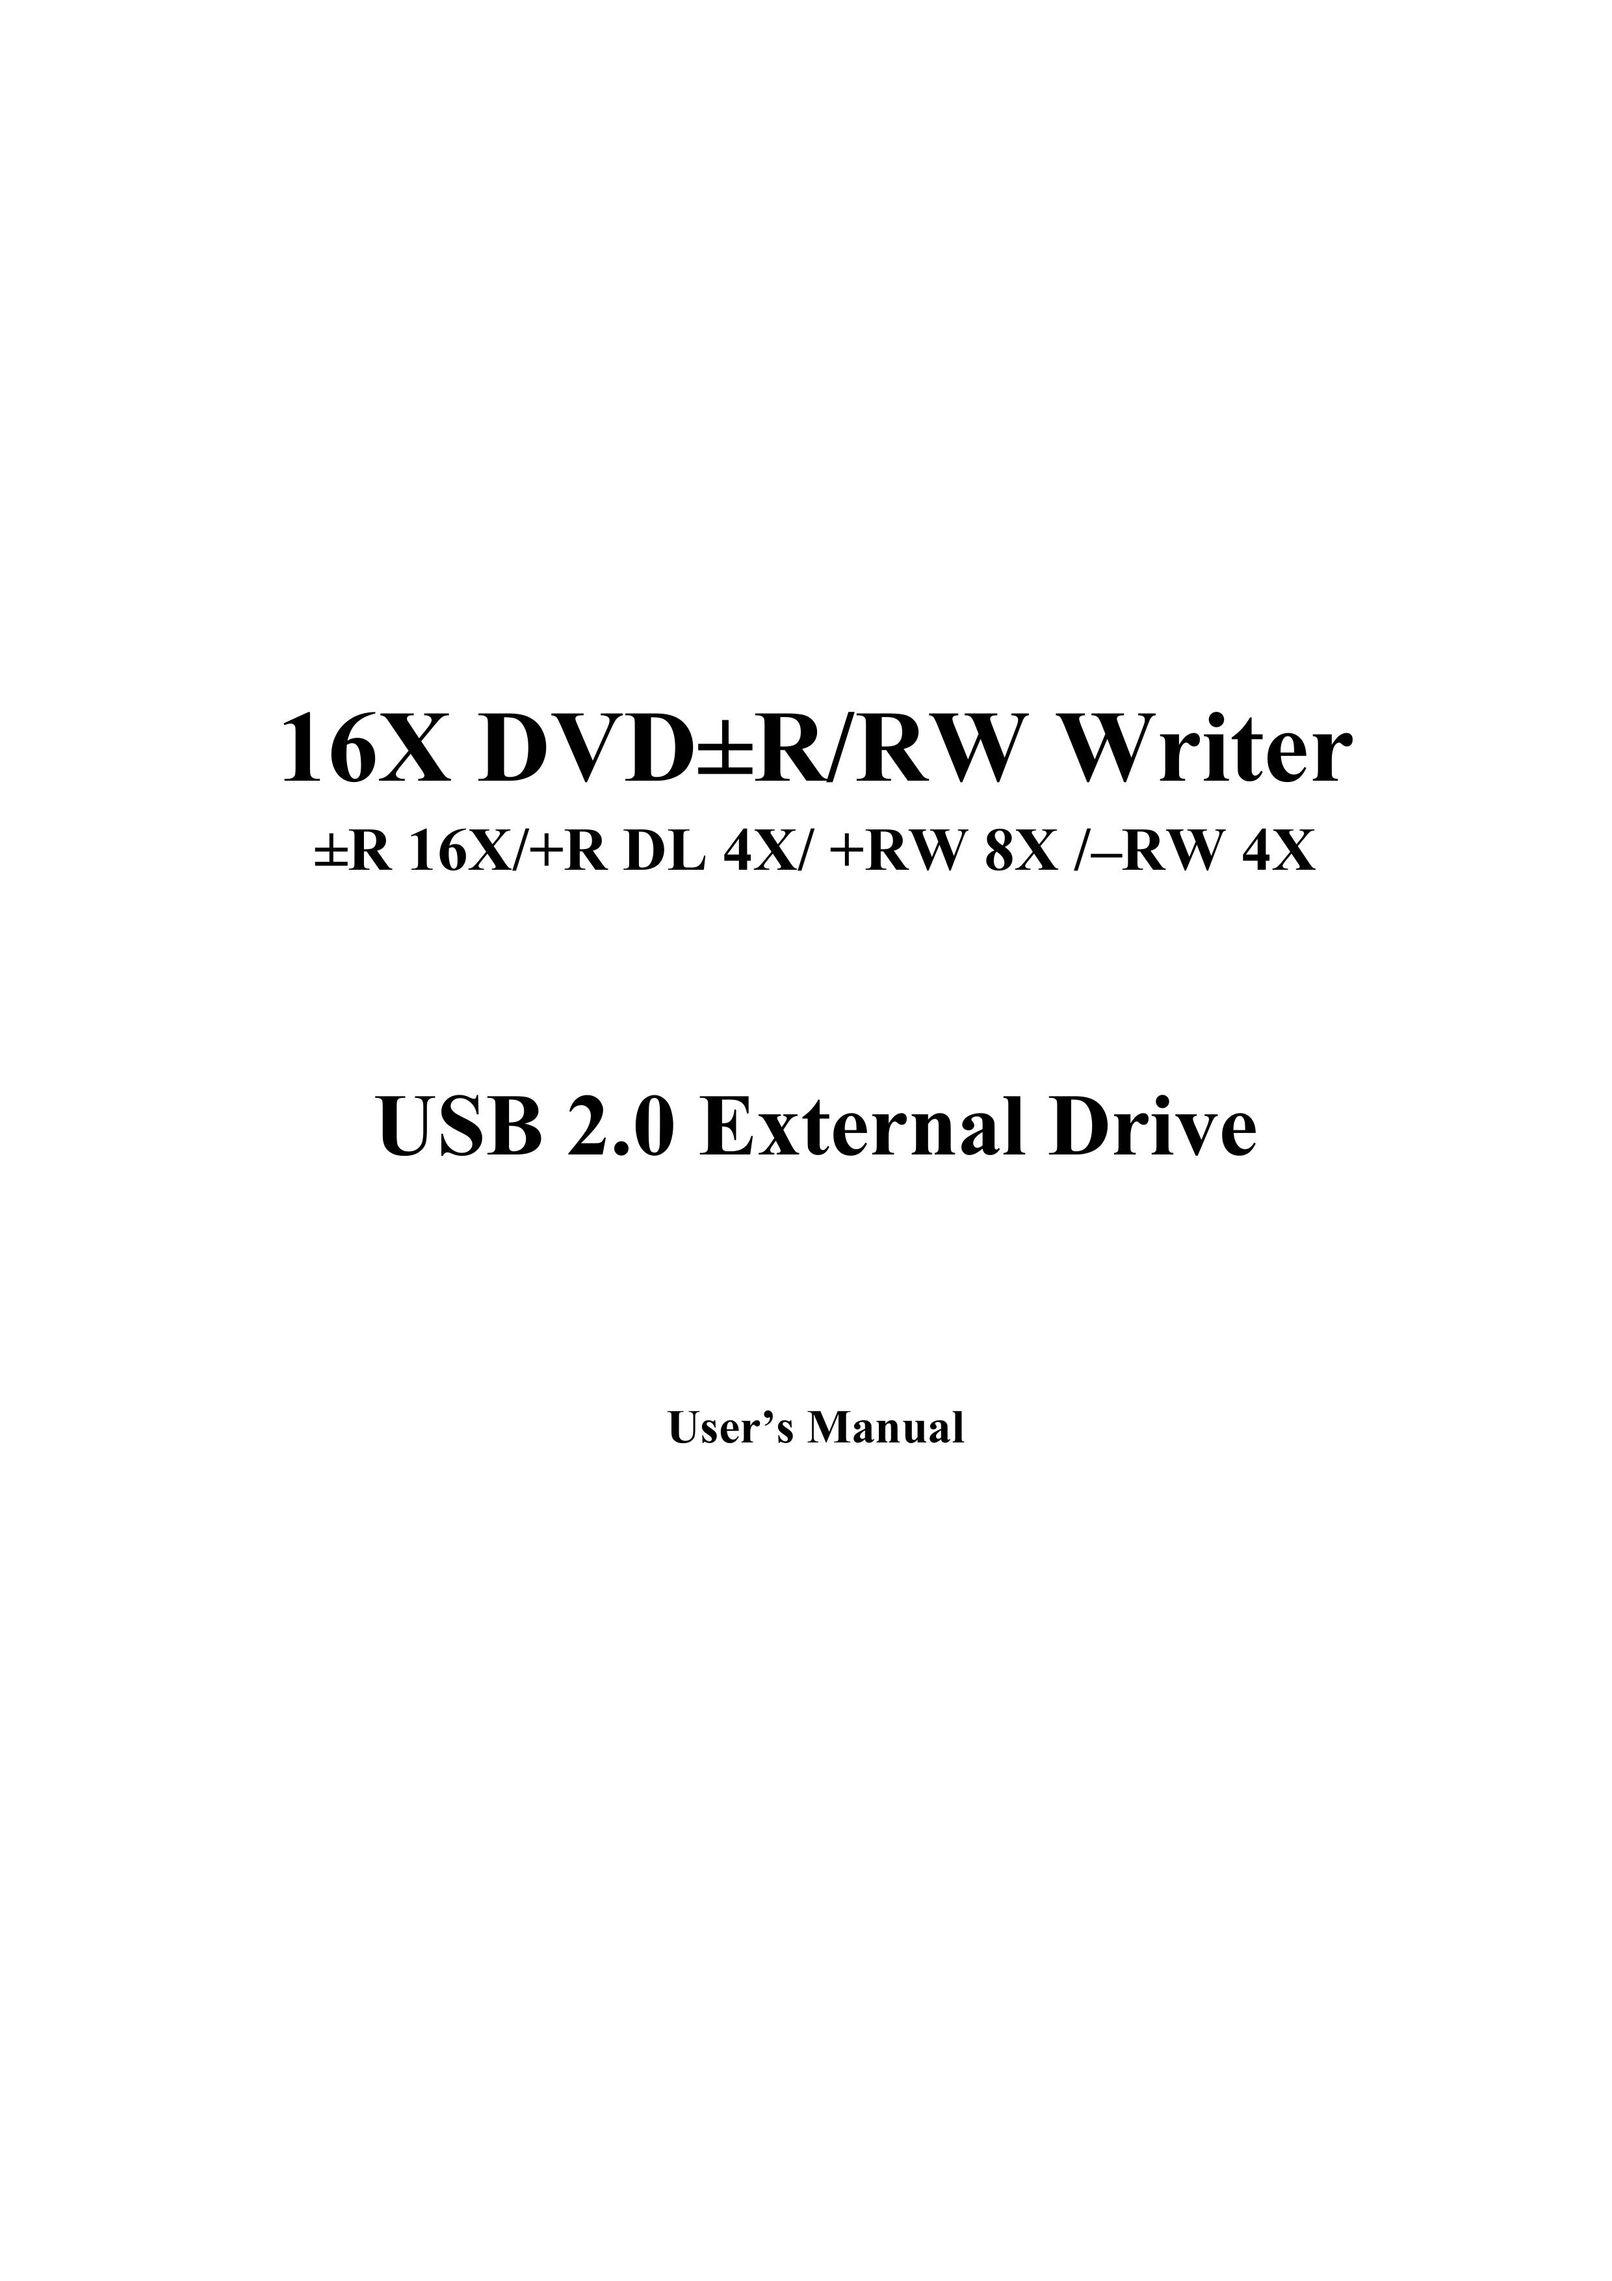 Emprex USB 2.0 External Drive Network Card User Manual